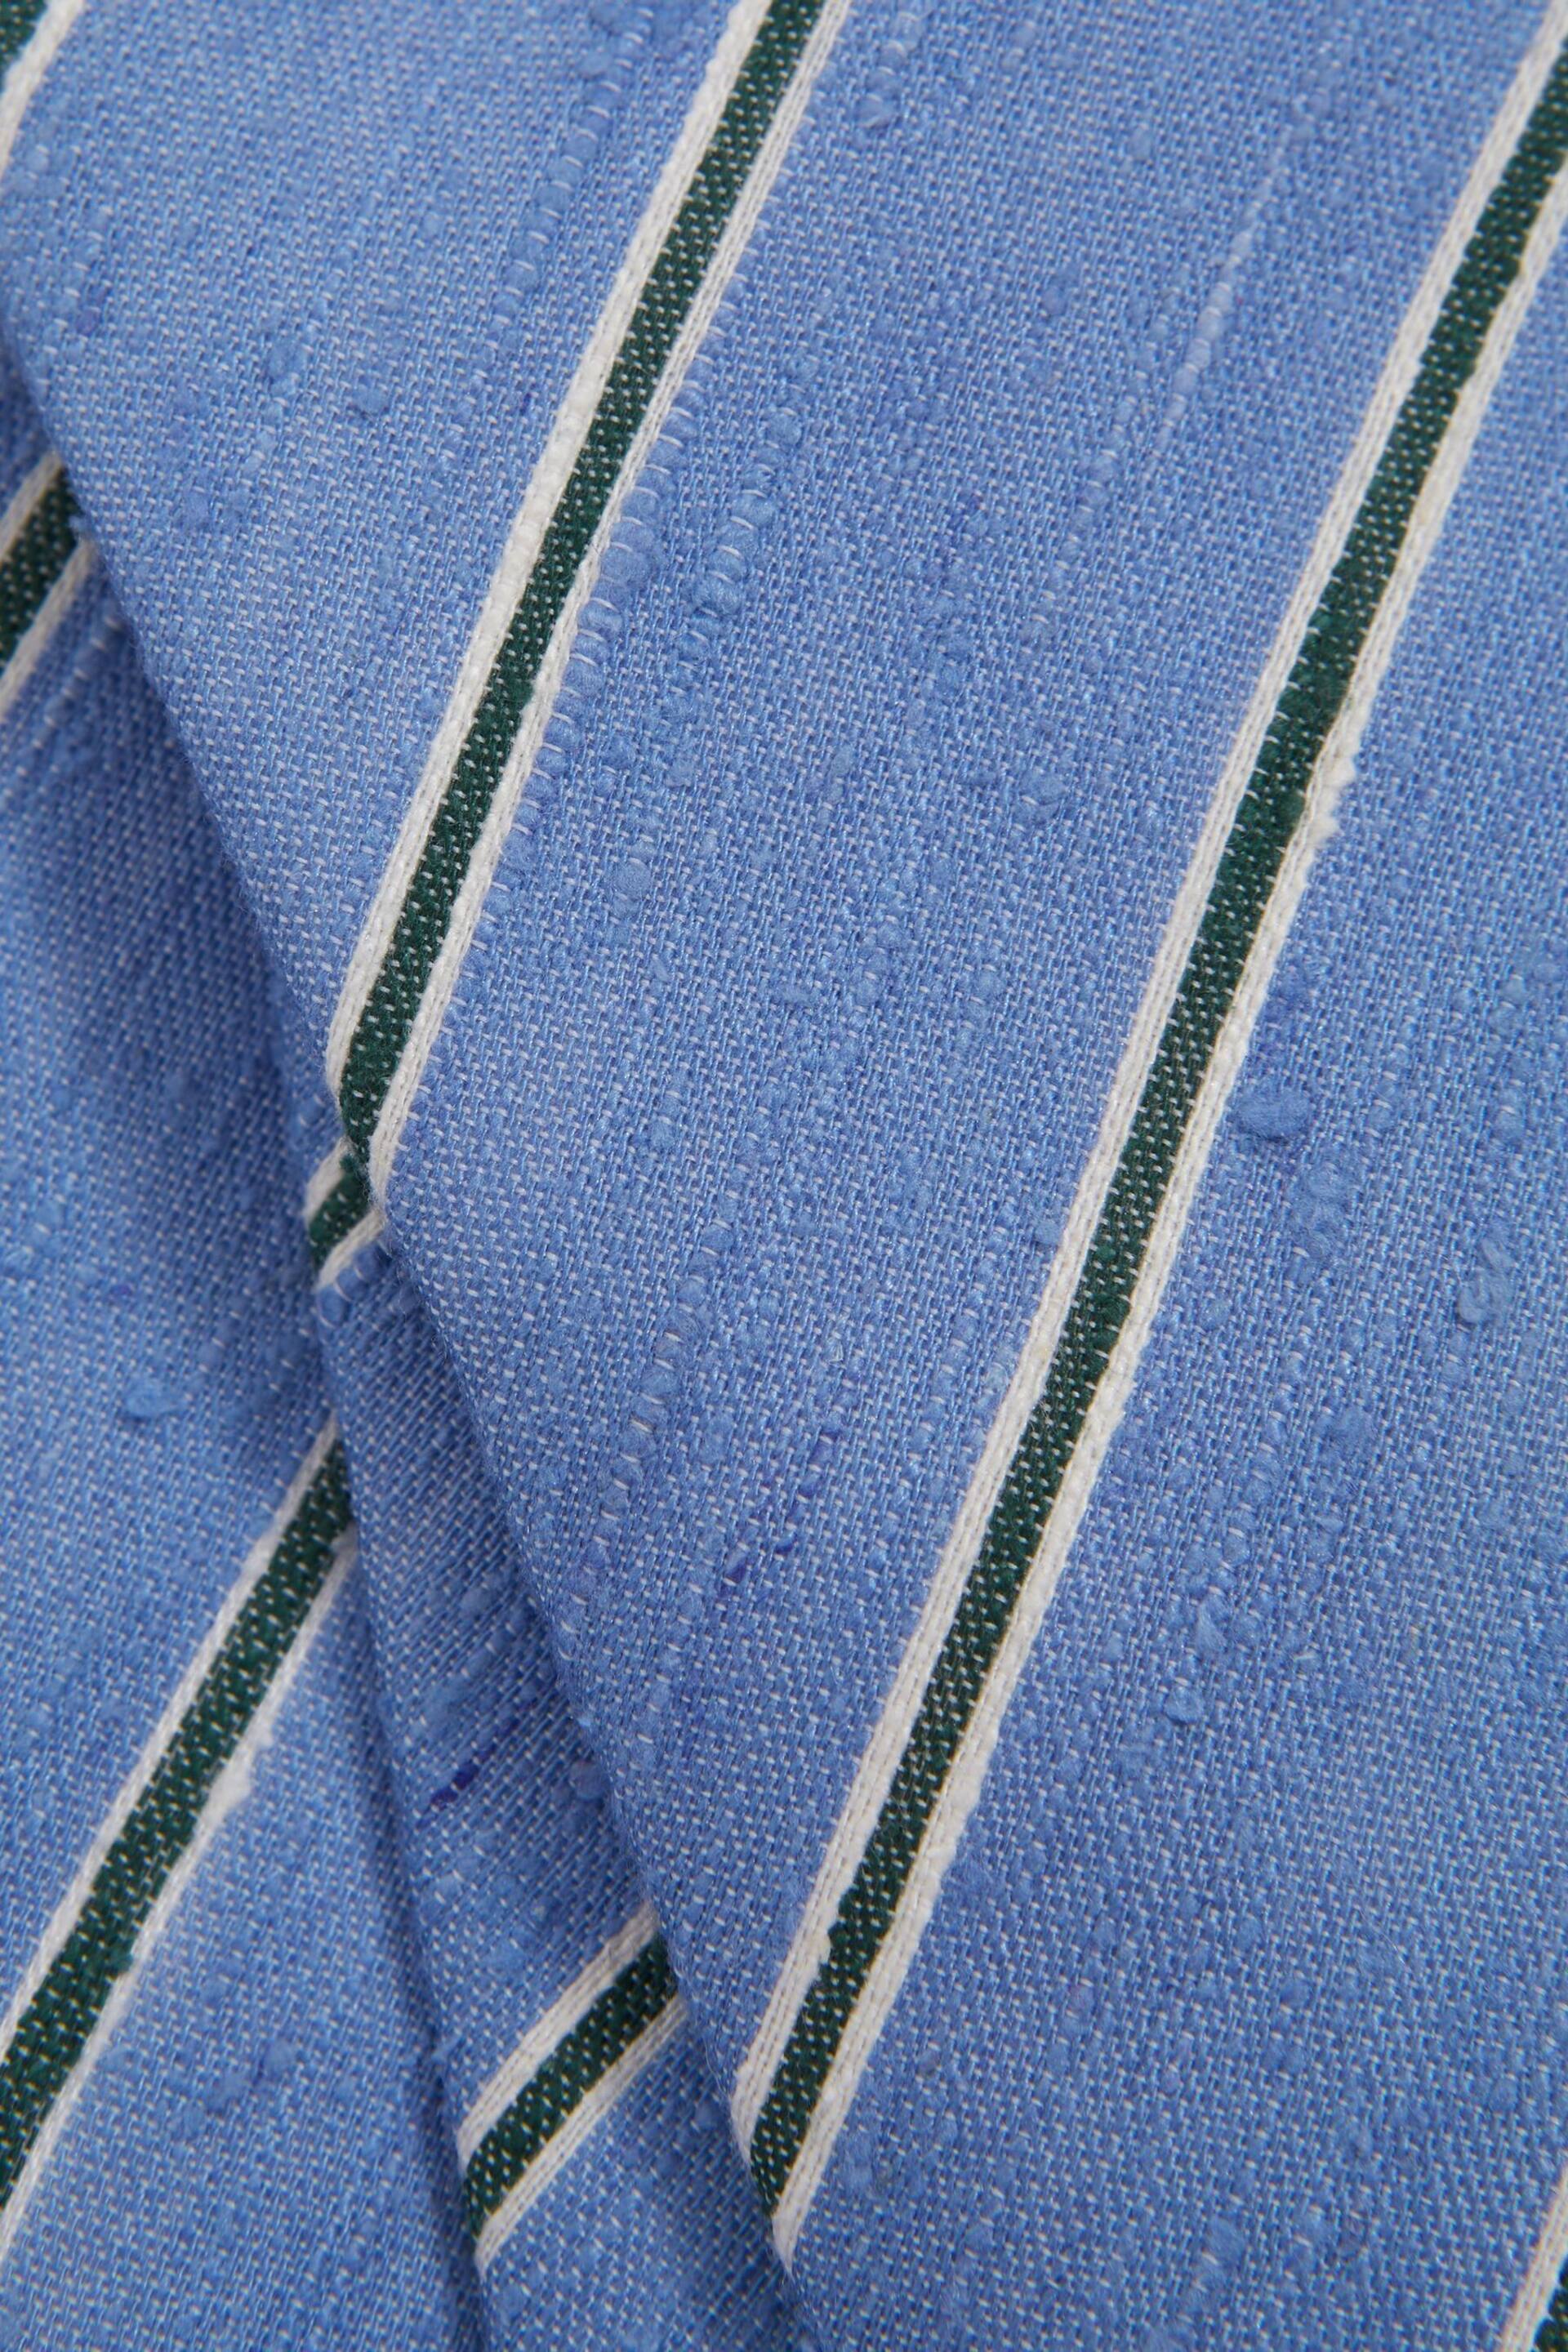 Reiss Sky Blue Ravenna Silk Blend Textured Tie - Image 5 of 5